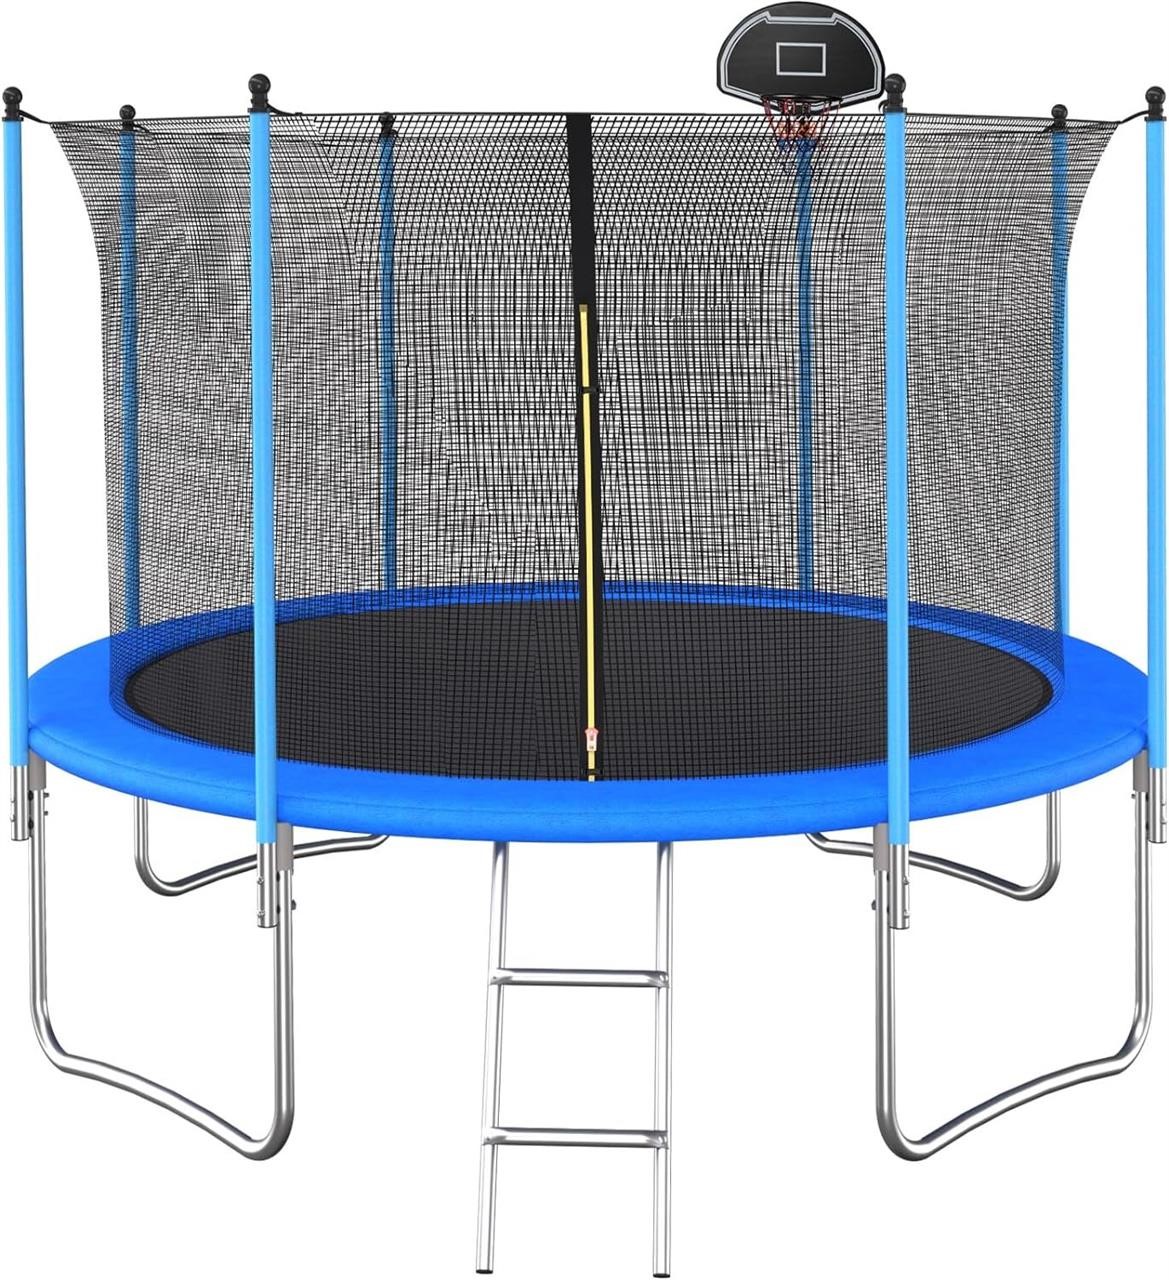 Trampoline 12FT with Basketball Hoop Enclosure Net